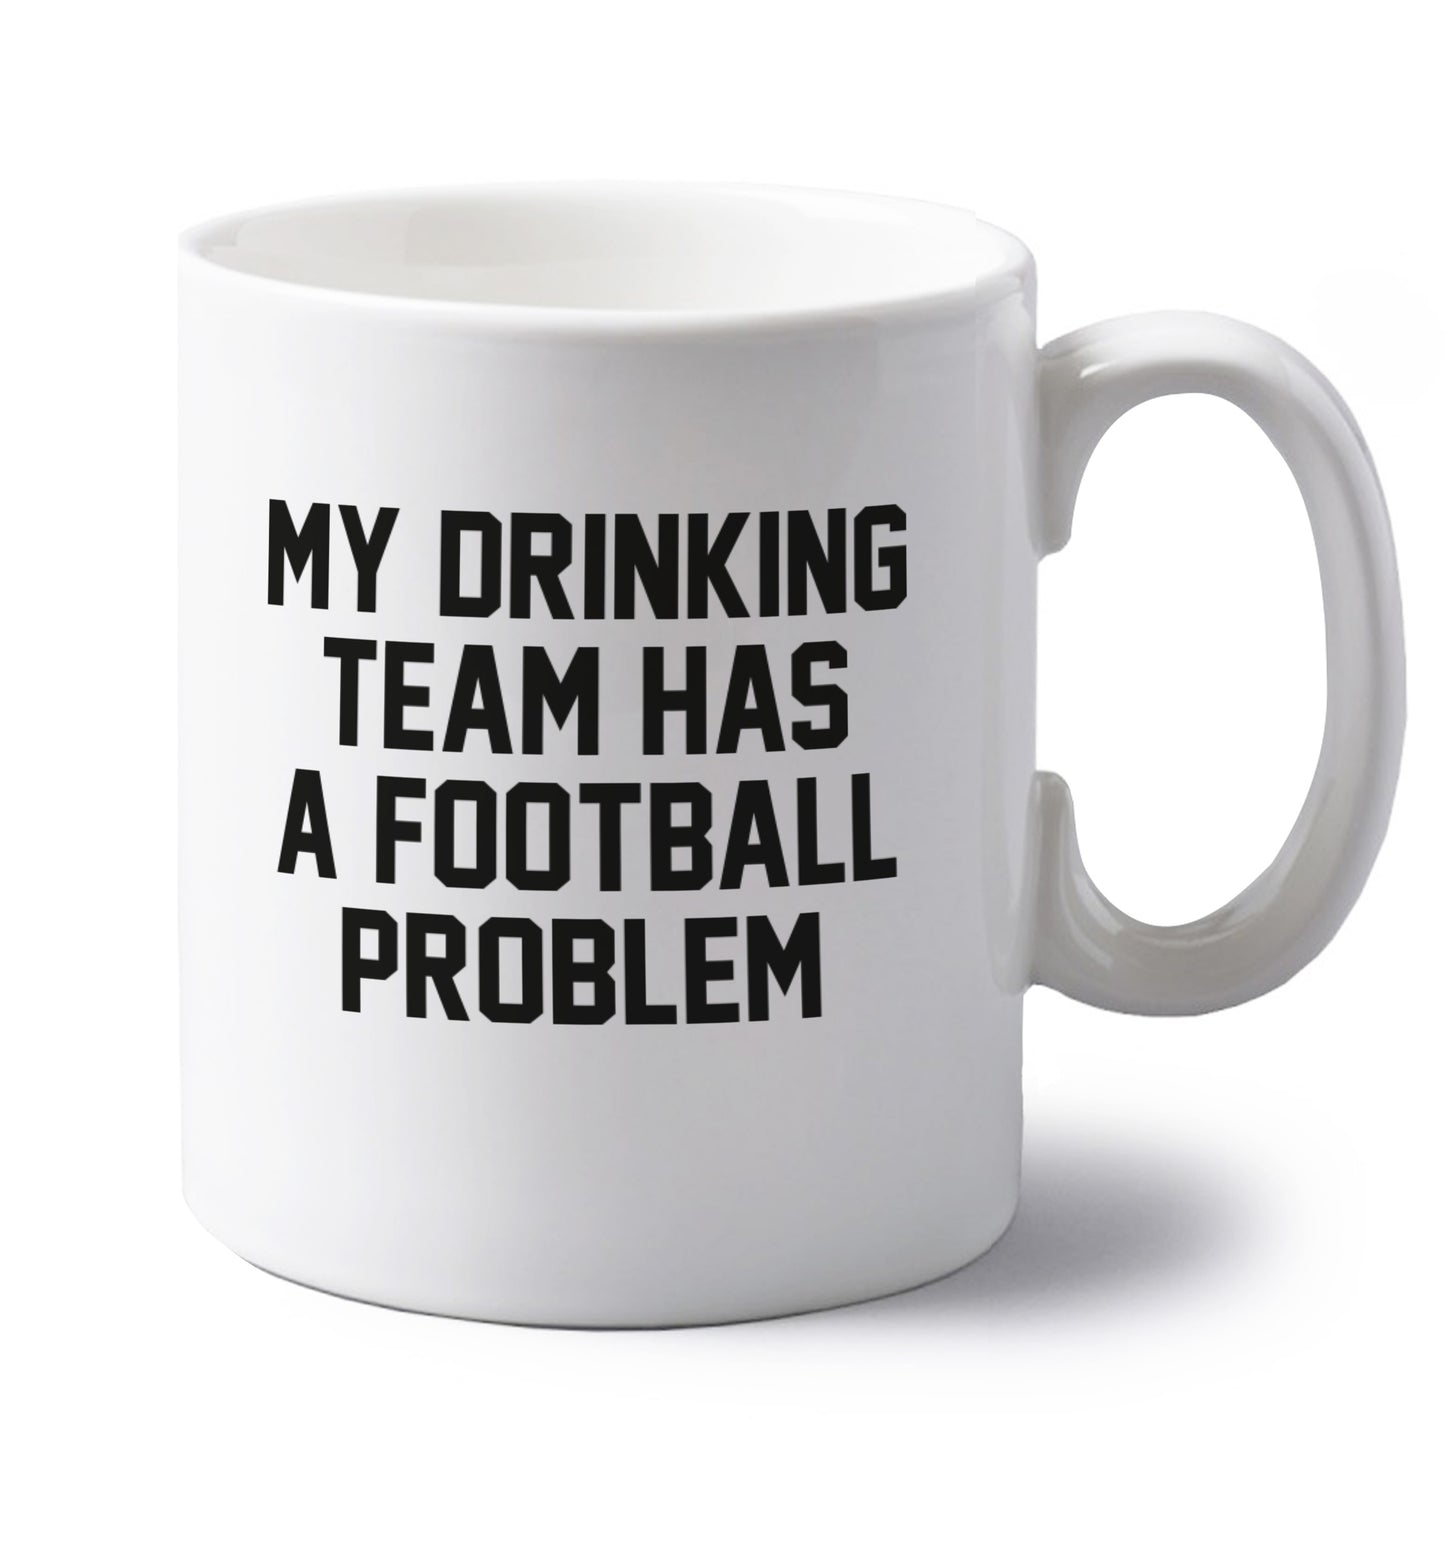 My drinking team has a football problem! left handed white ceramic mug 